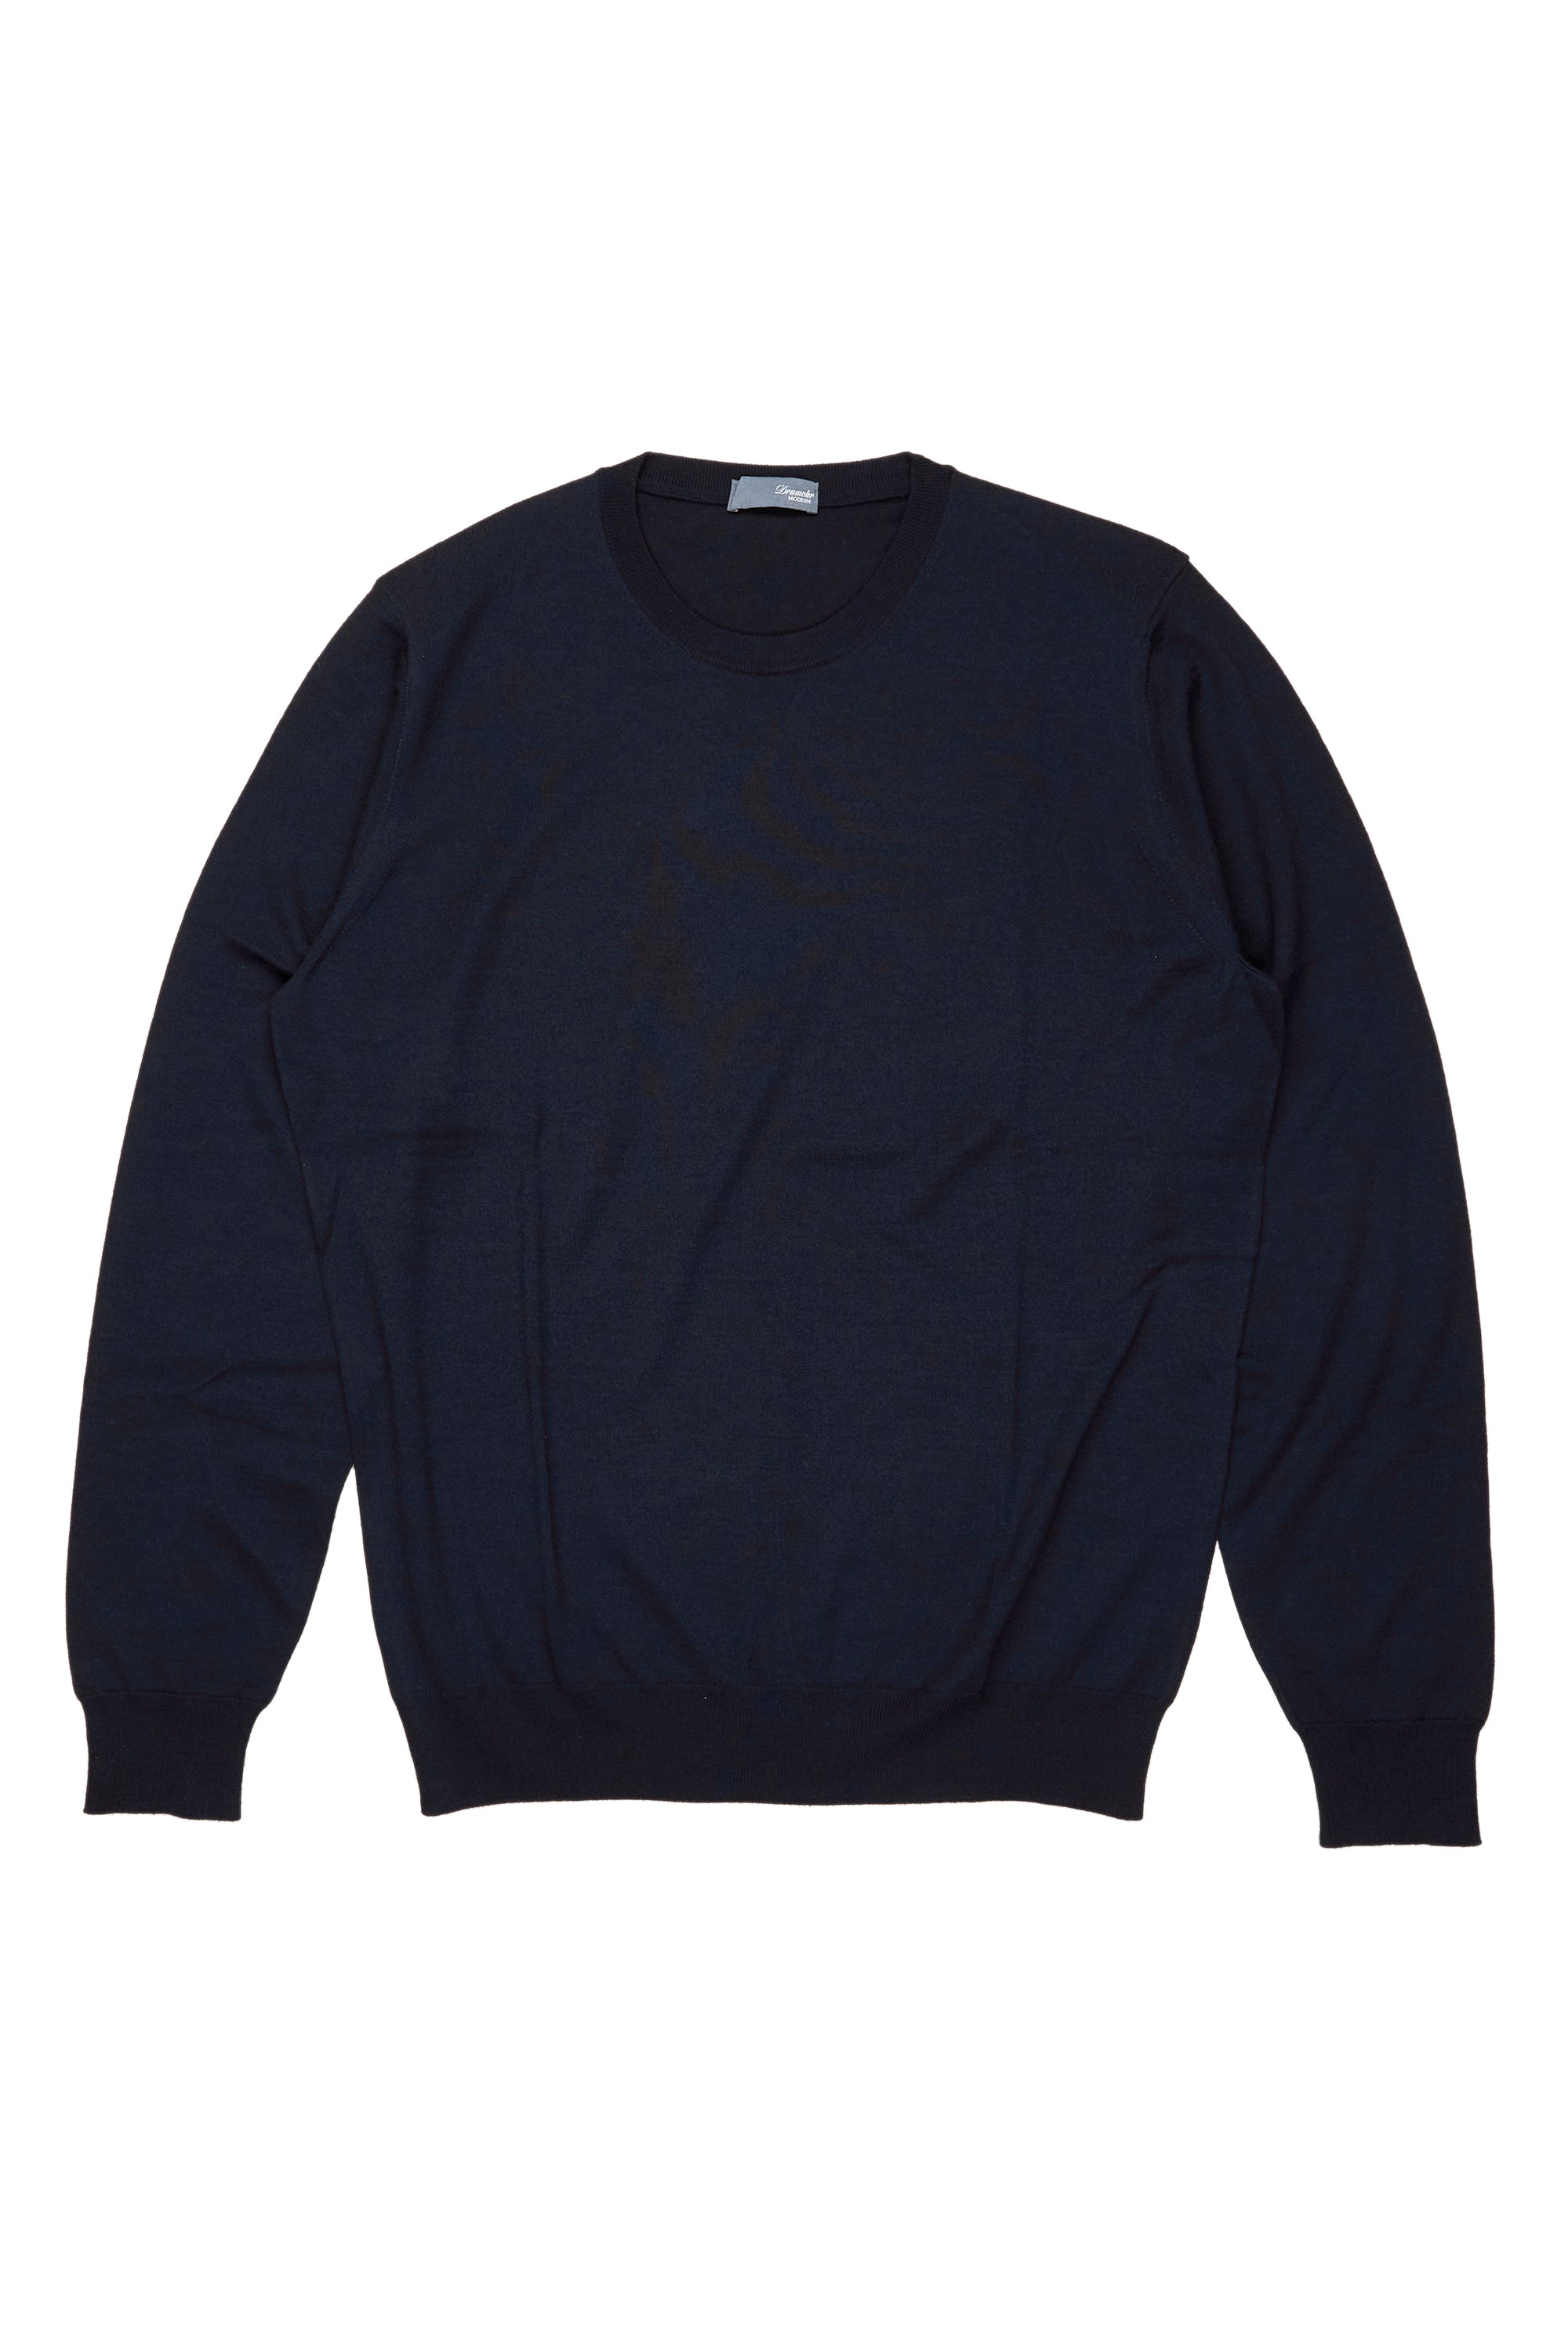 Drumohr Navy Extra Fine Merino Wool Crewneck Sweater